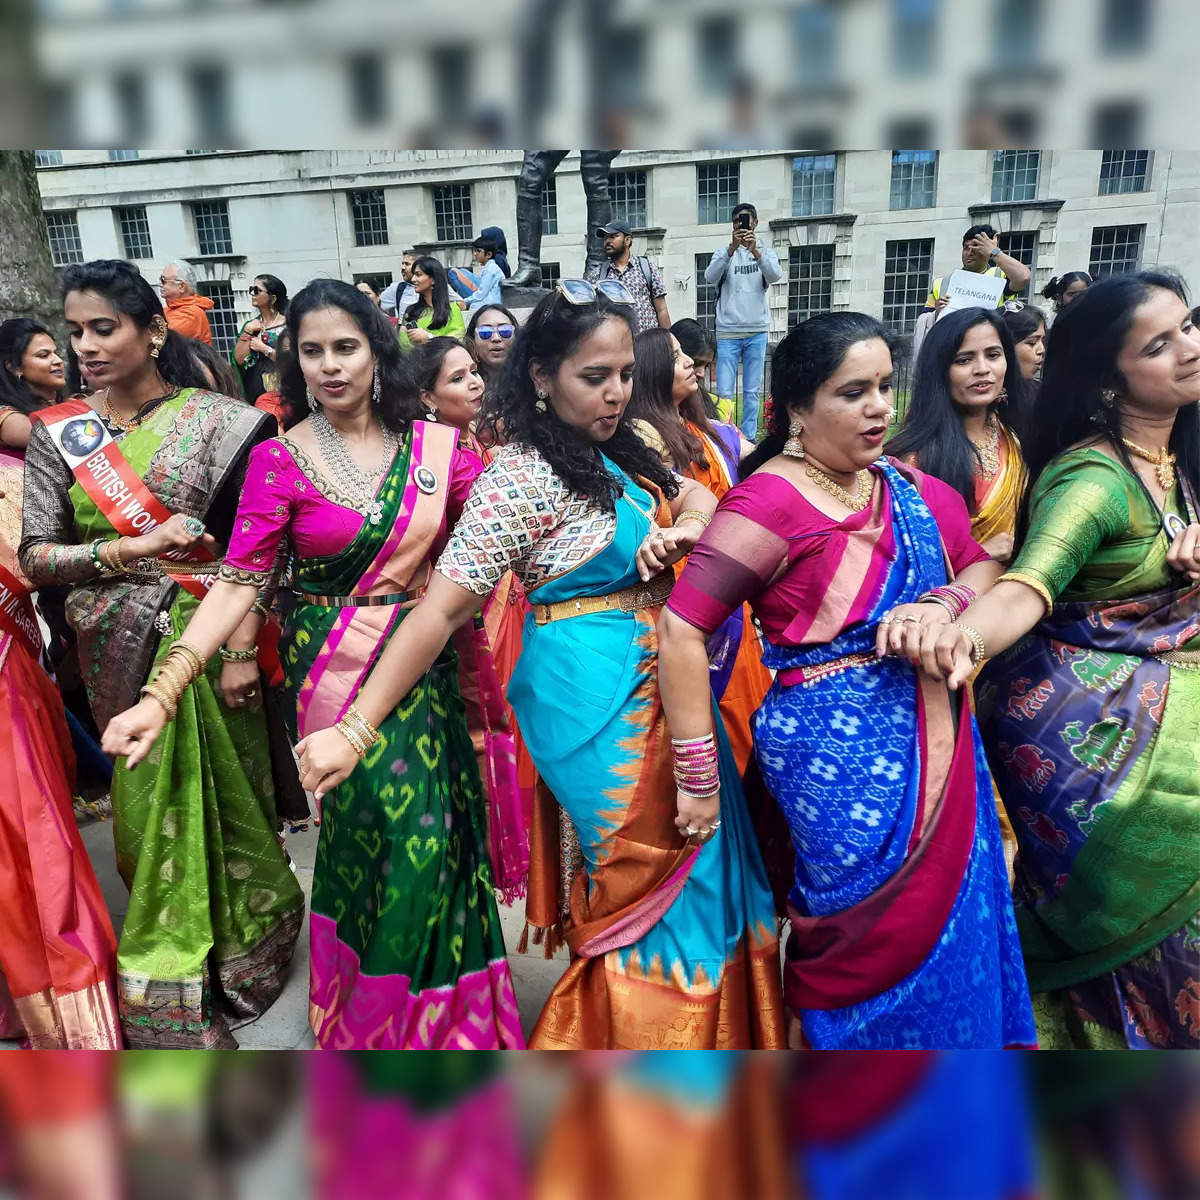 handloom day 2023: On National Handloom Day, 700 saree-clad PIO women dance  to 'Naatu Naatu' on London streets - The Economic Times